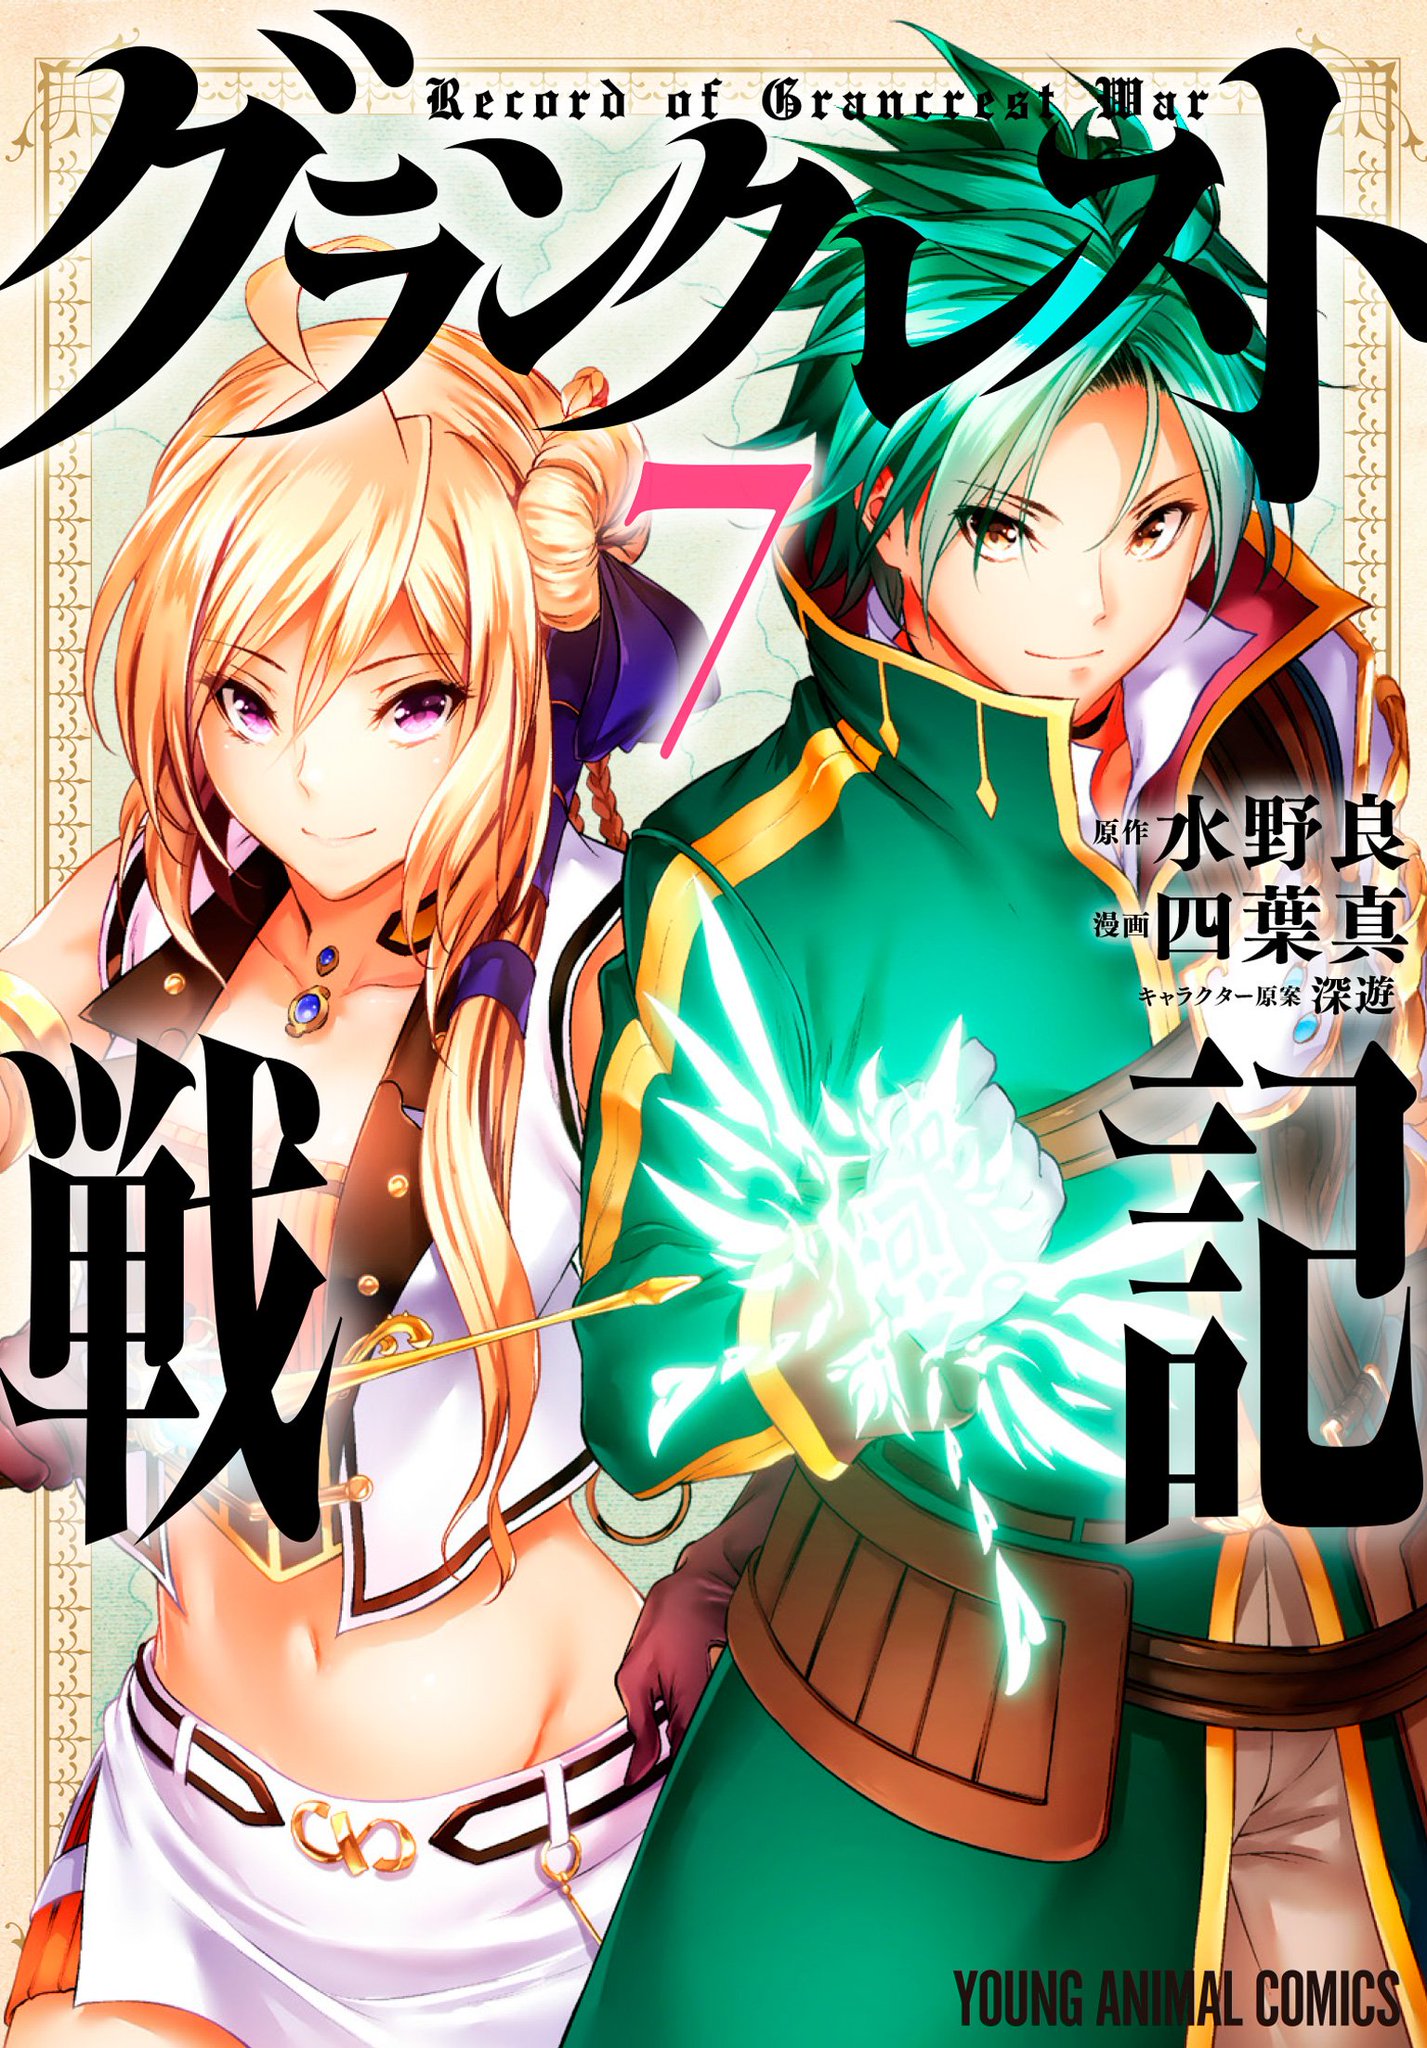 Grancrest Senki Manga Chapter List - MangaFreak